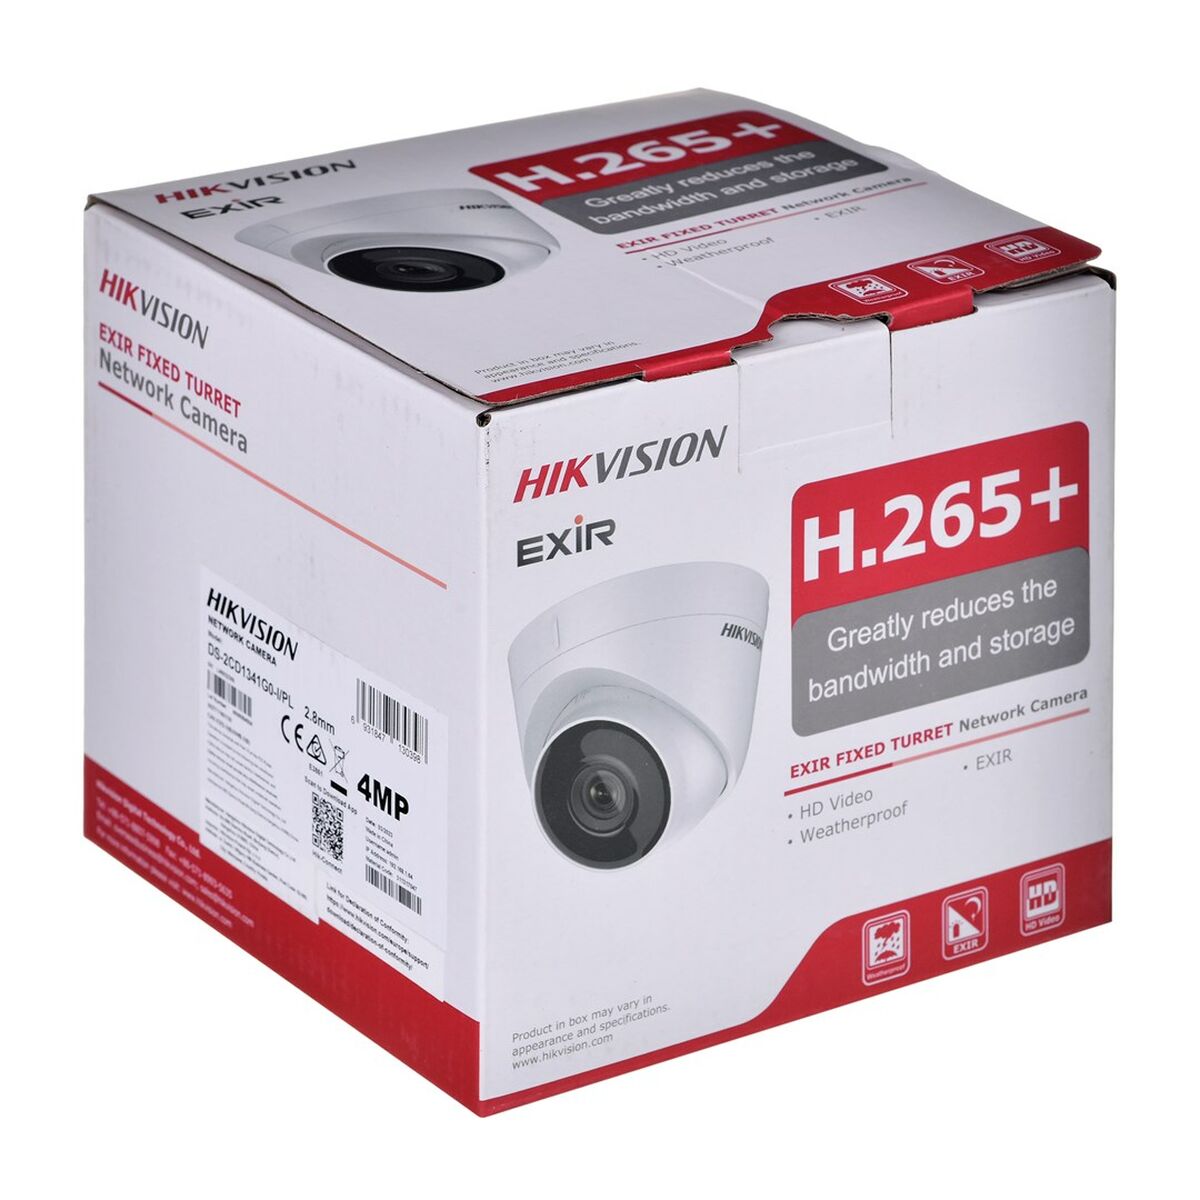 Novērošanas kamera Hikvision DS-2CD1341G0-I/PL